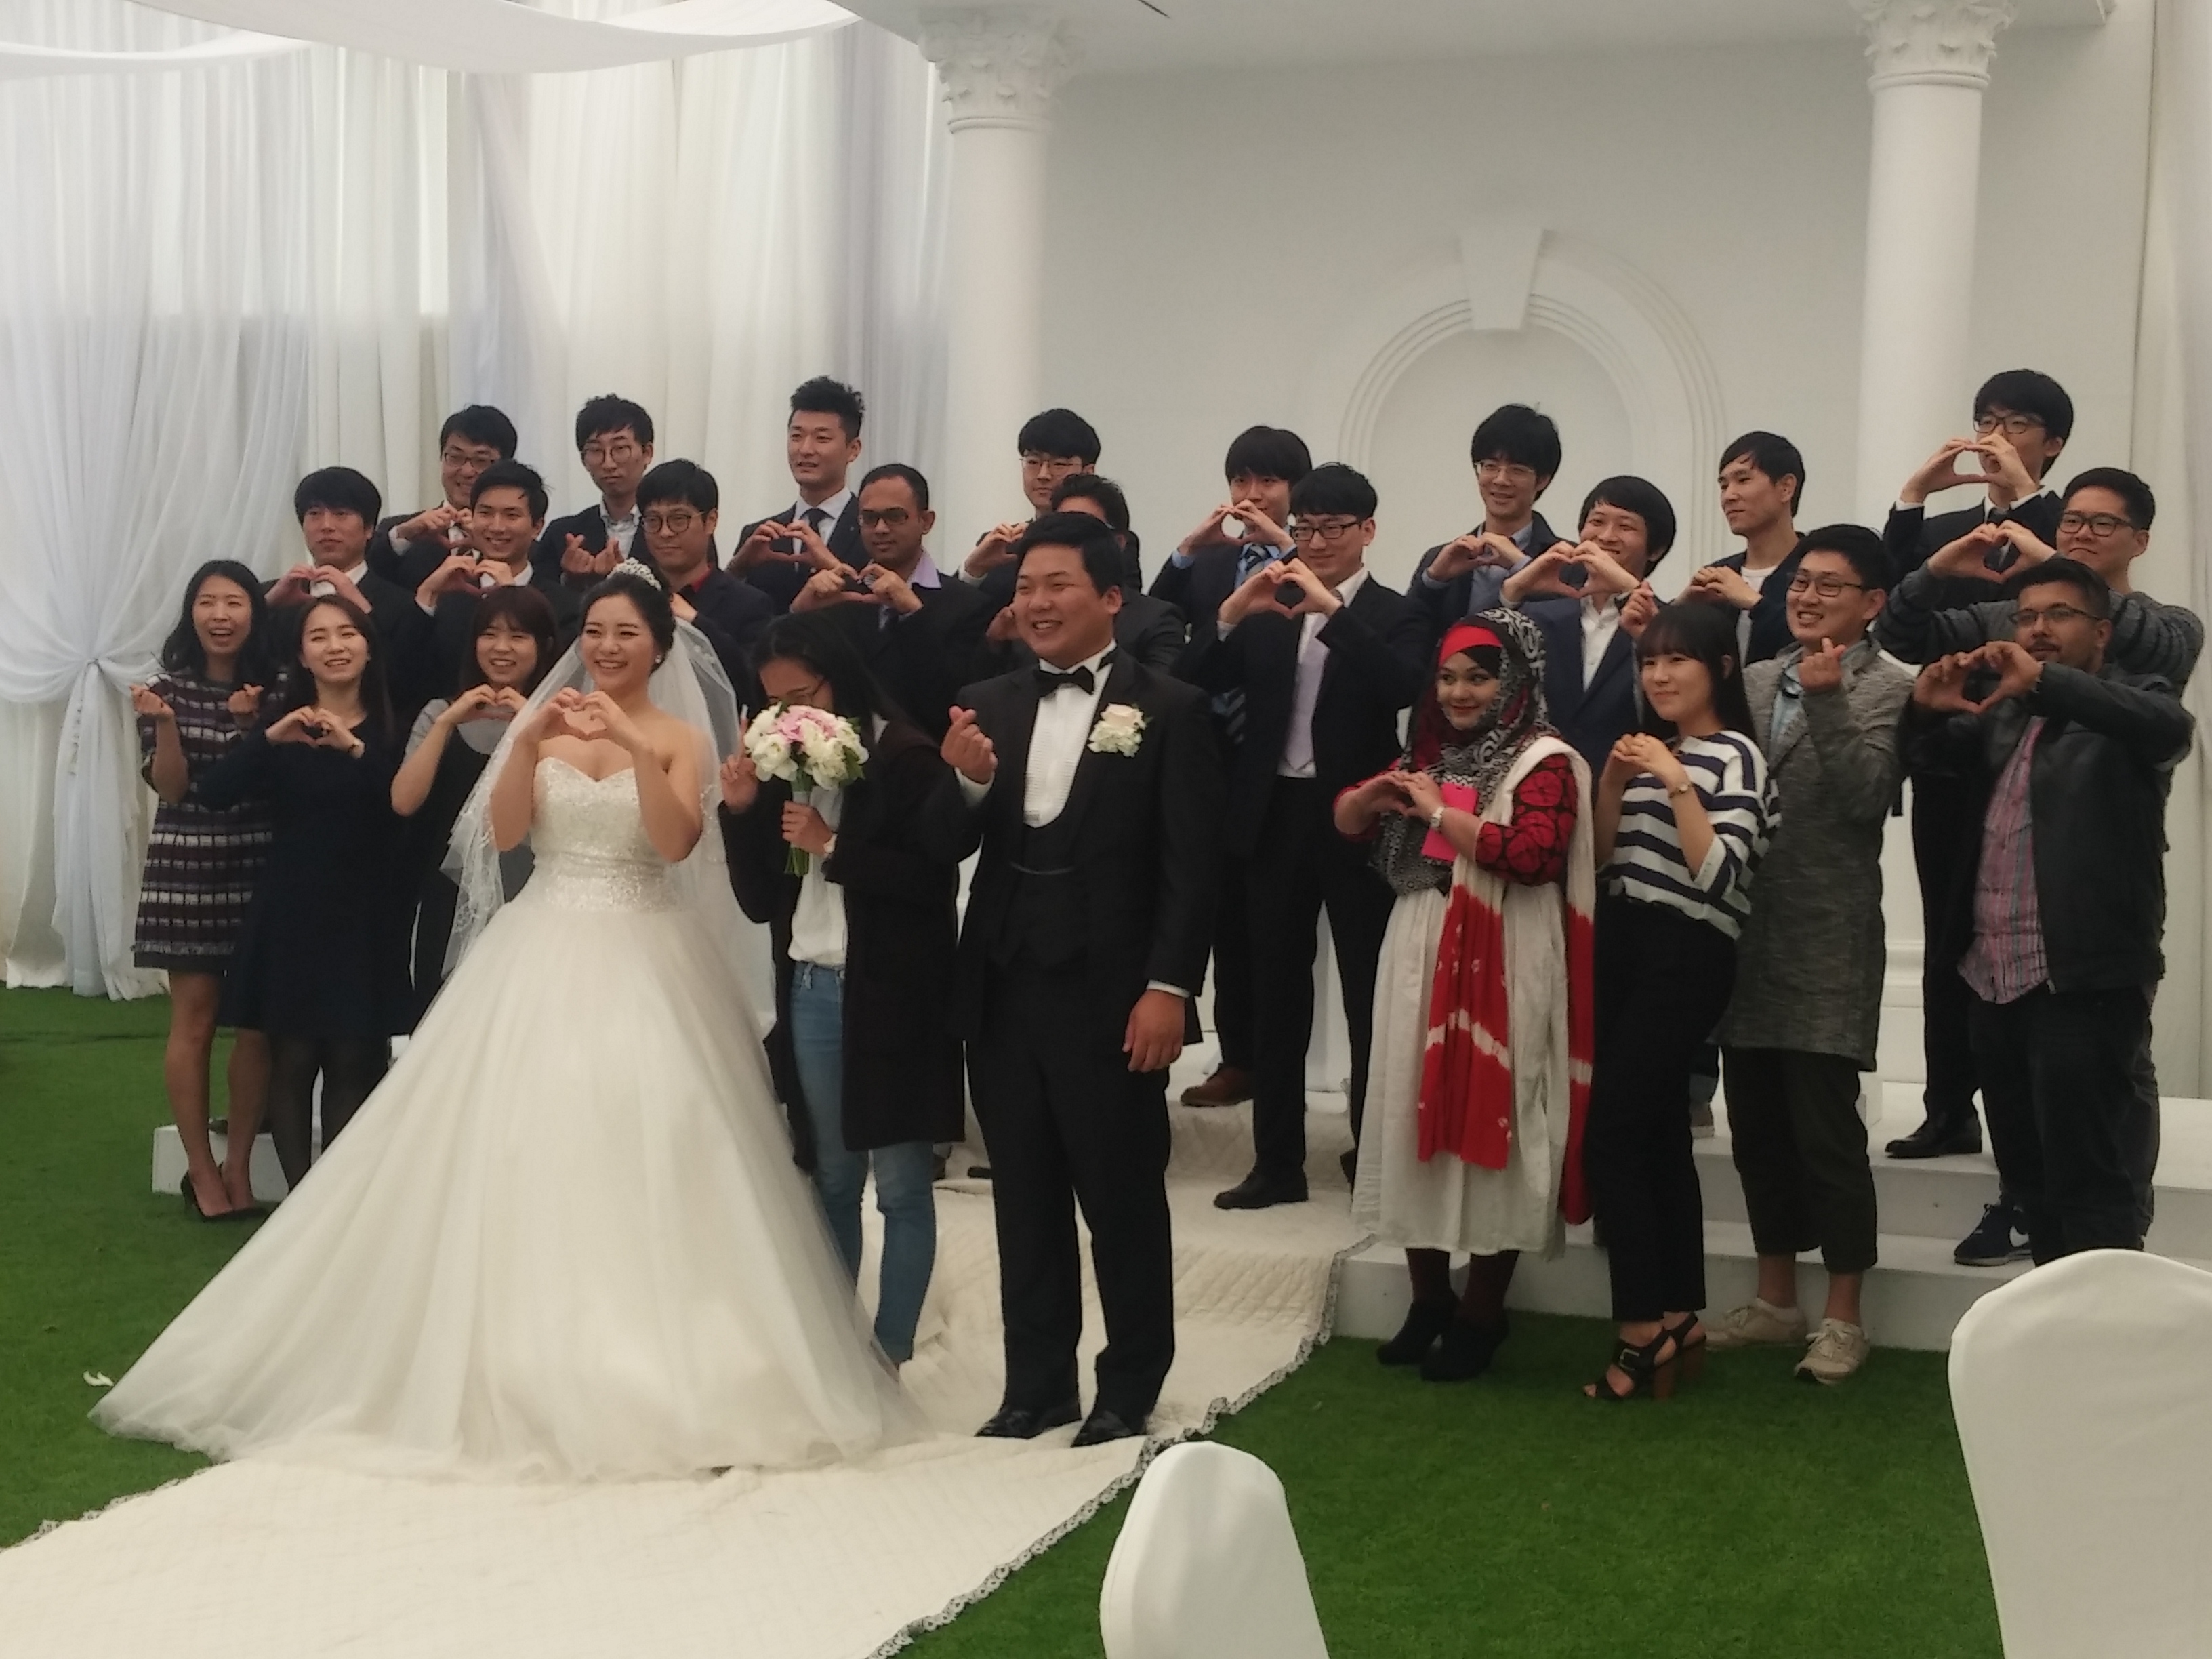 Sung-Gook's wedding 20160430_141035.jpg